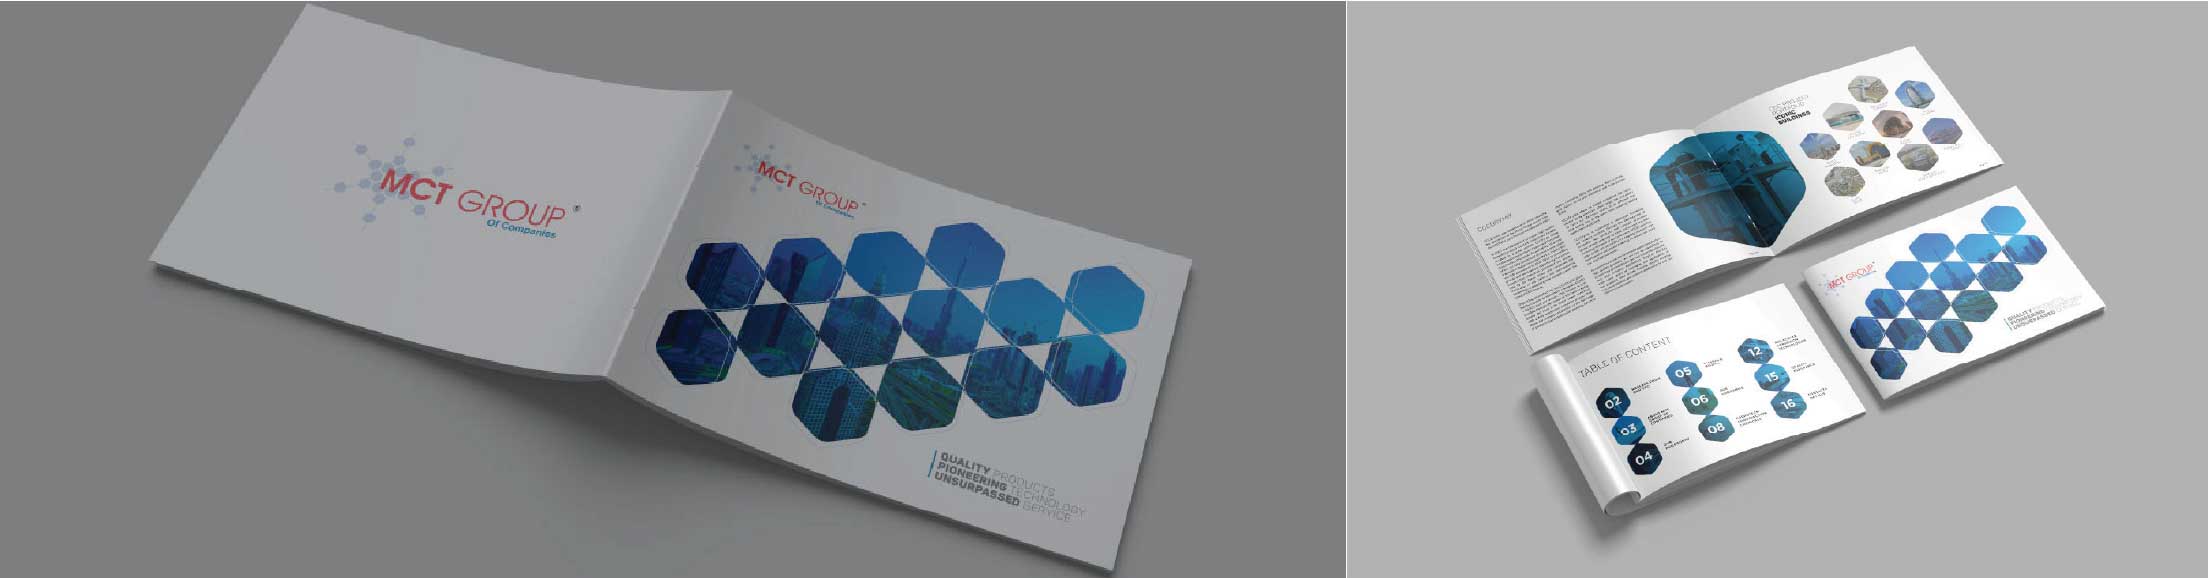 MCT brochure design - Dubai - 360besta portfolio